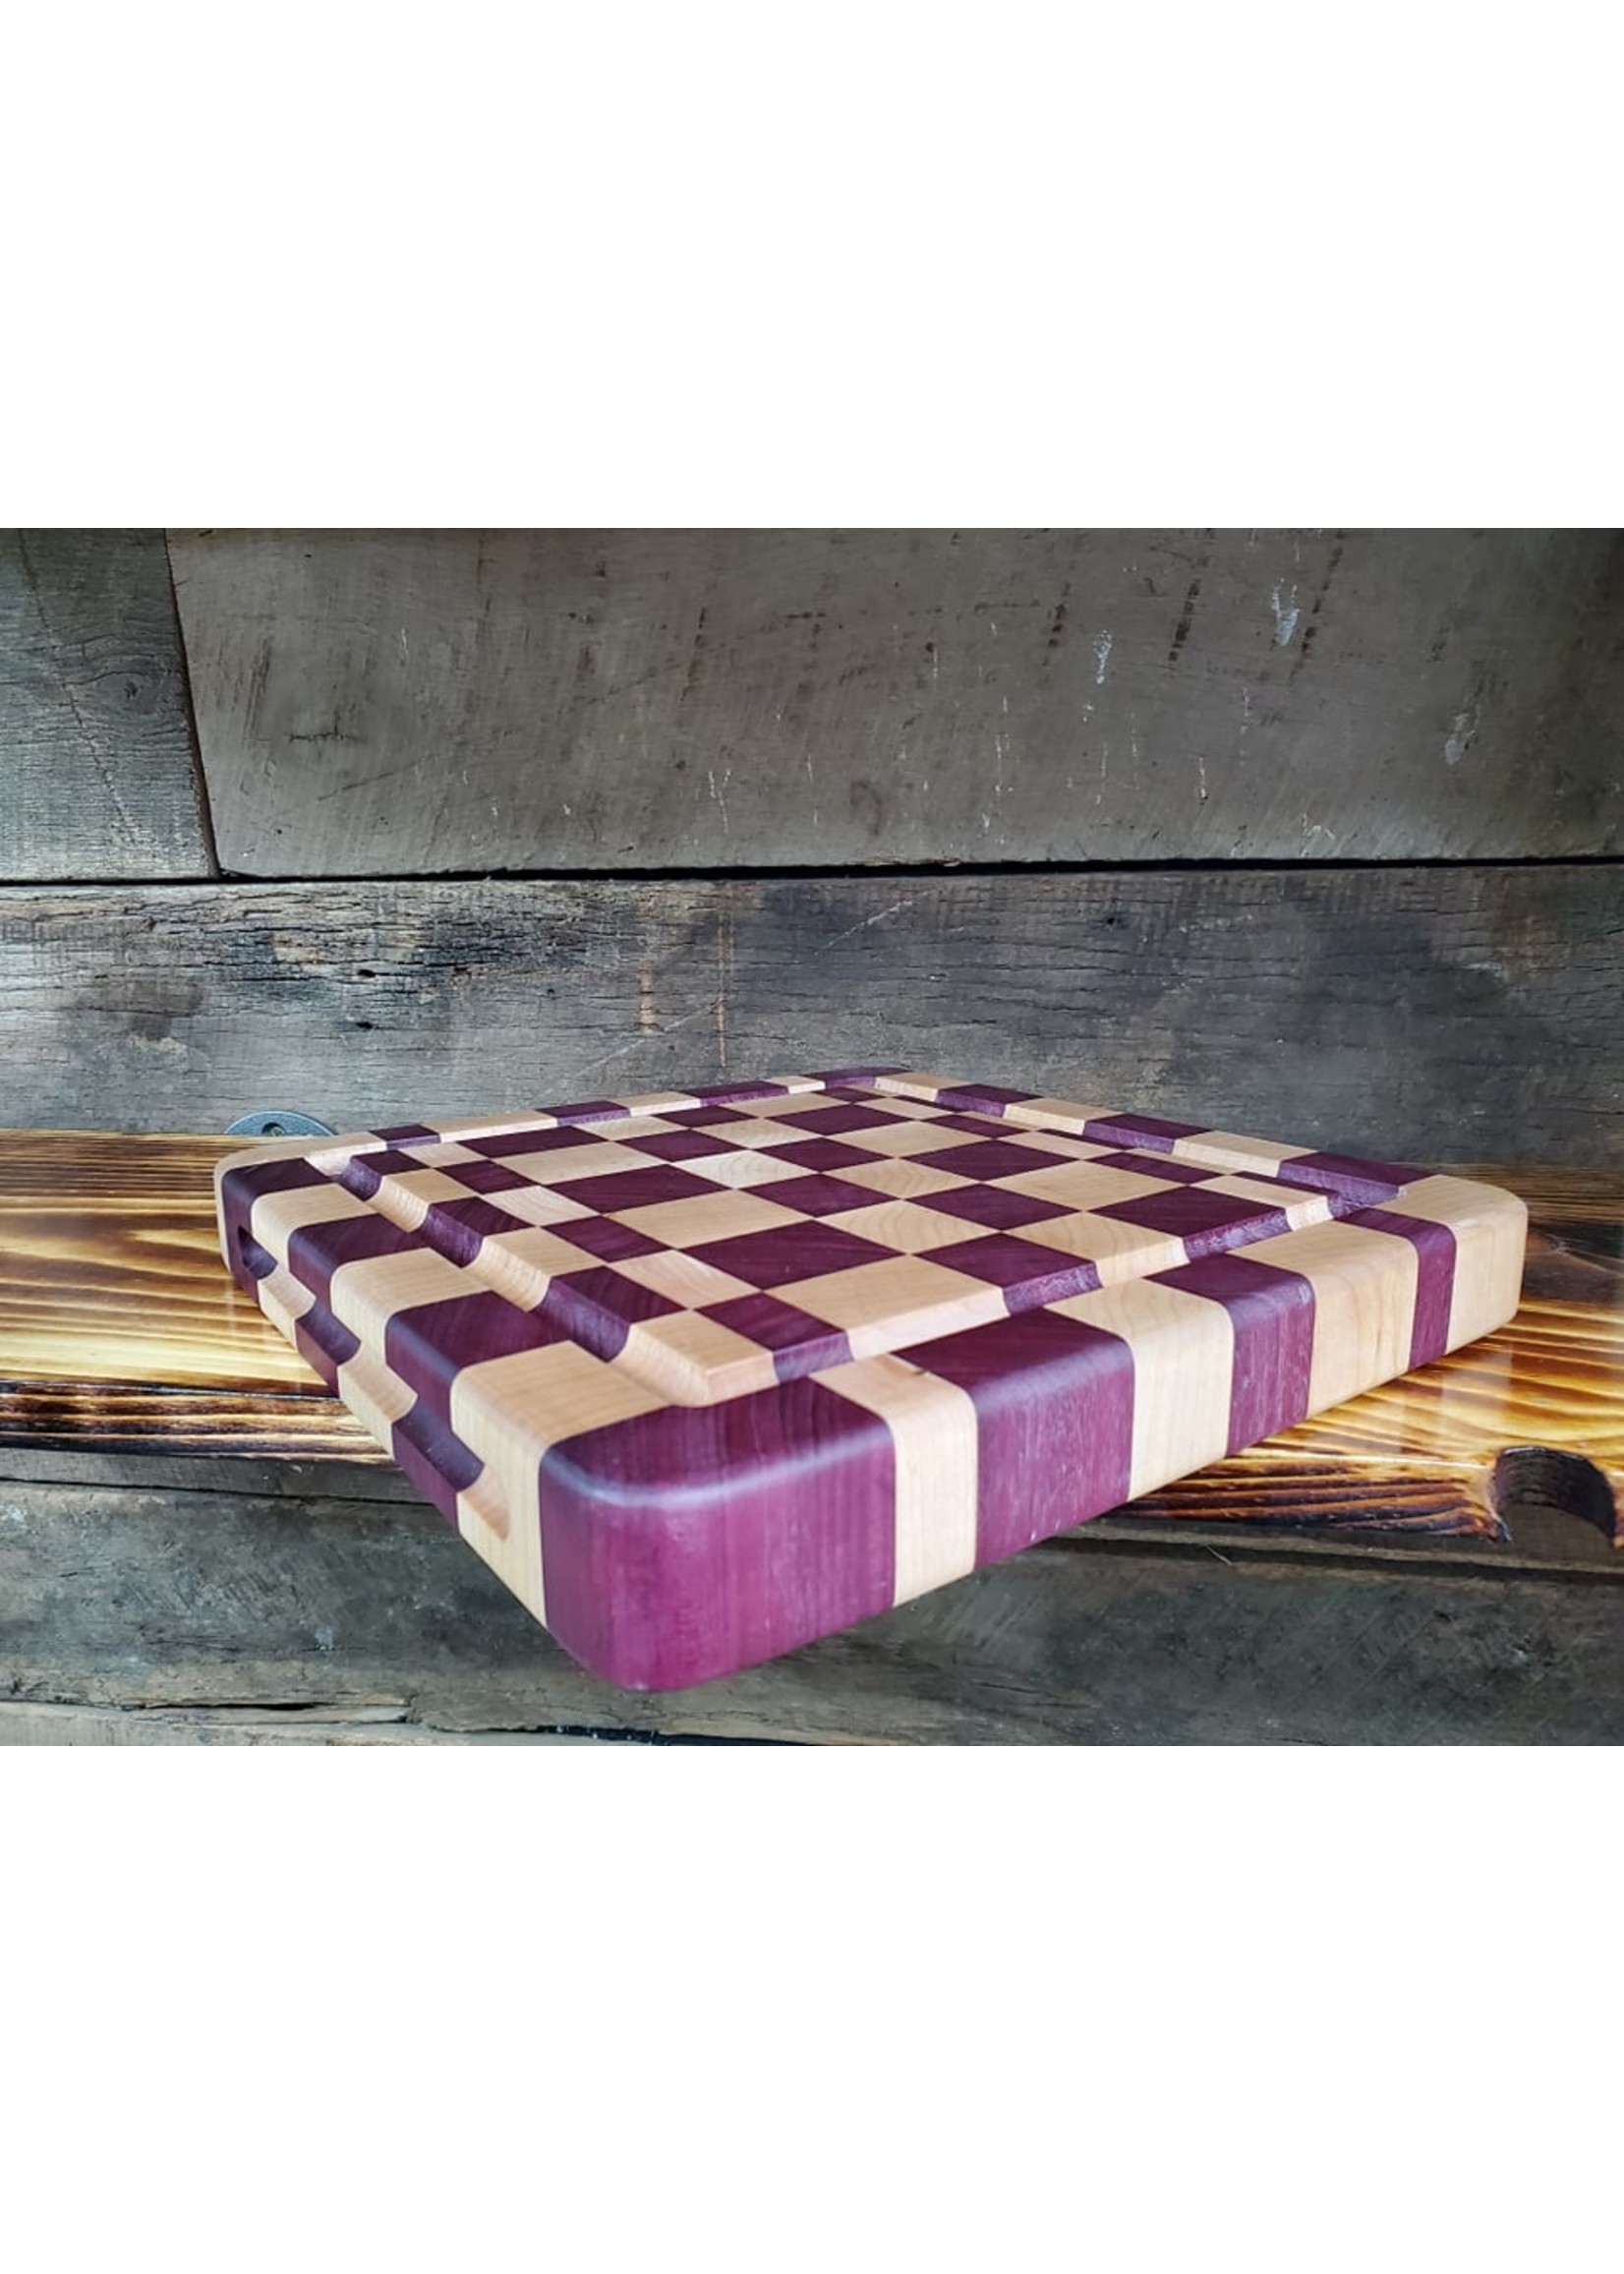 211 Woodworks 12"x12" End Grain Maple/Purpleheart Cutting Board